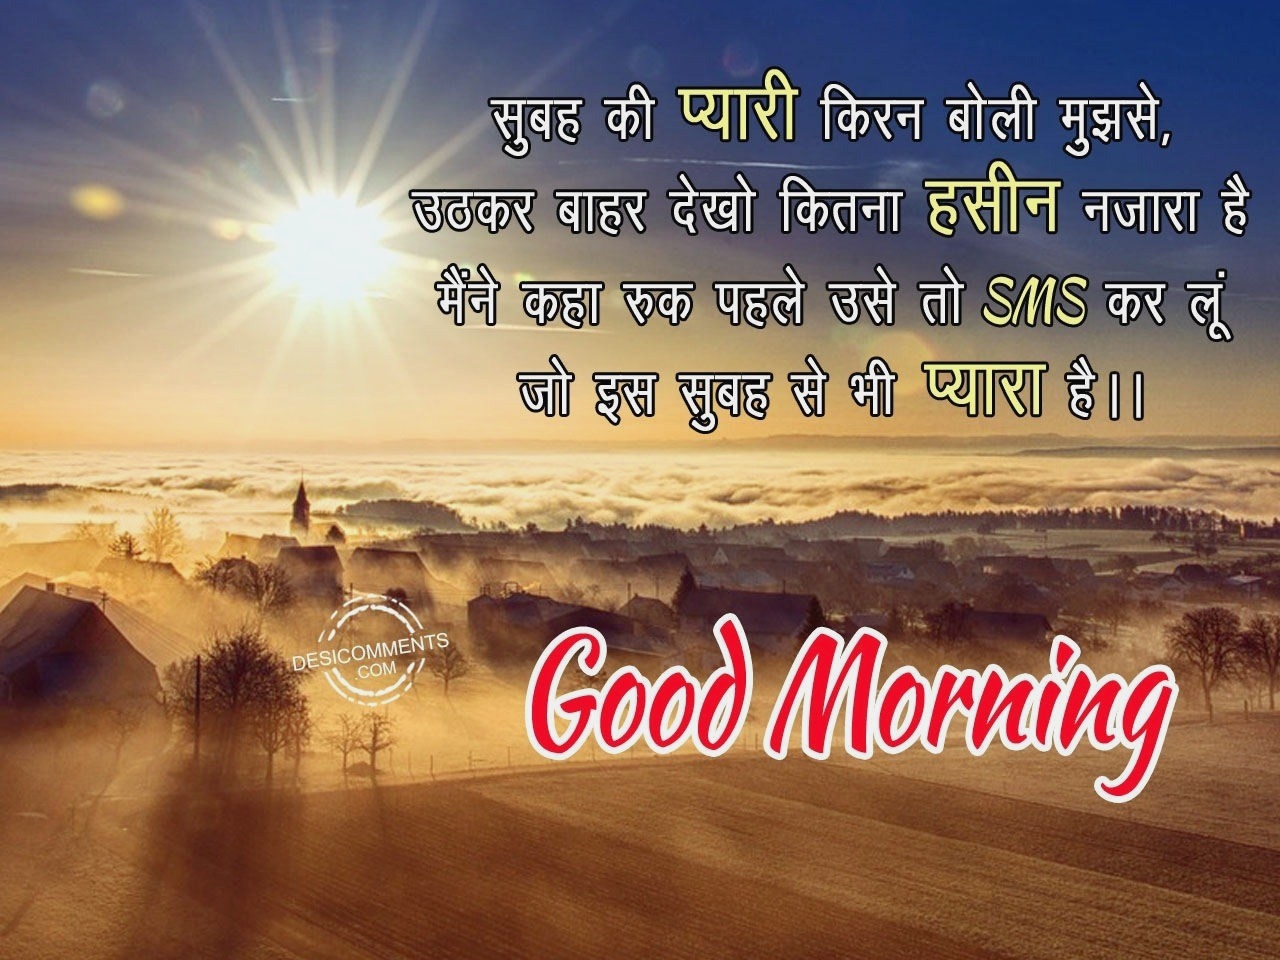 Good Morning Images For Whatsapp In Hindi - Subah Ki Pyari Kiran Boli Mujhse , HD Wallpaper & Backgrounds